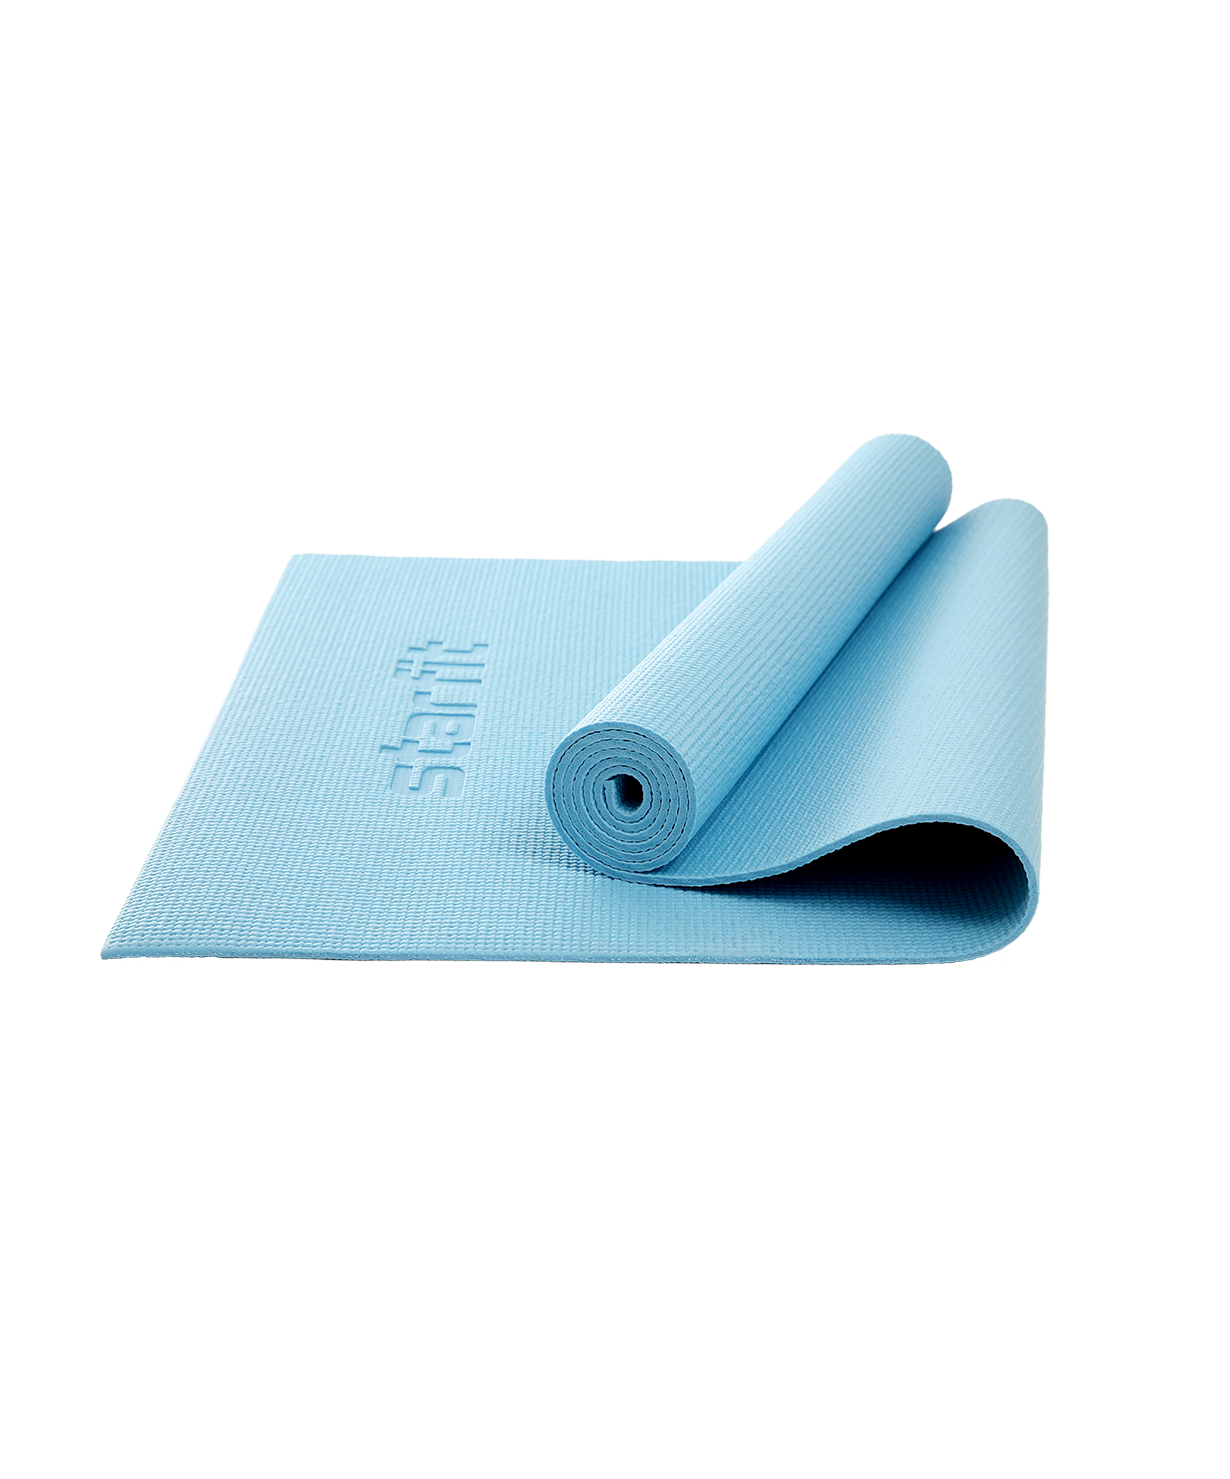 фото Коврик для йоги и фитнеса starfit core fm-101 173x61, pvc, синий пастель, 0,5 см